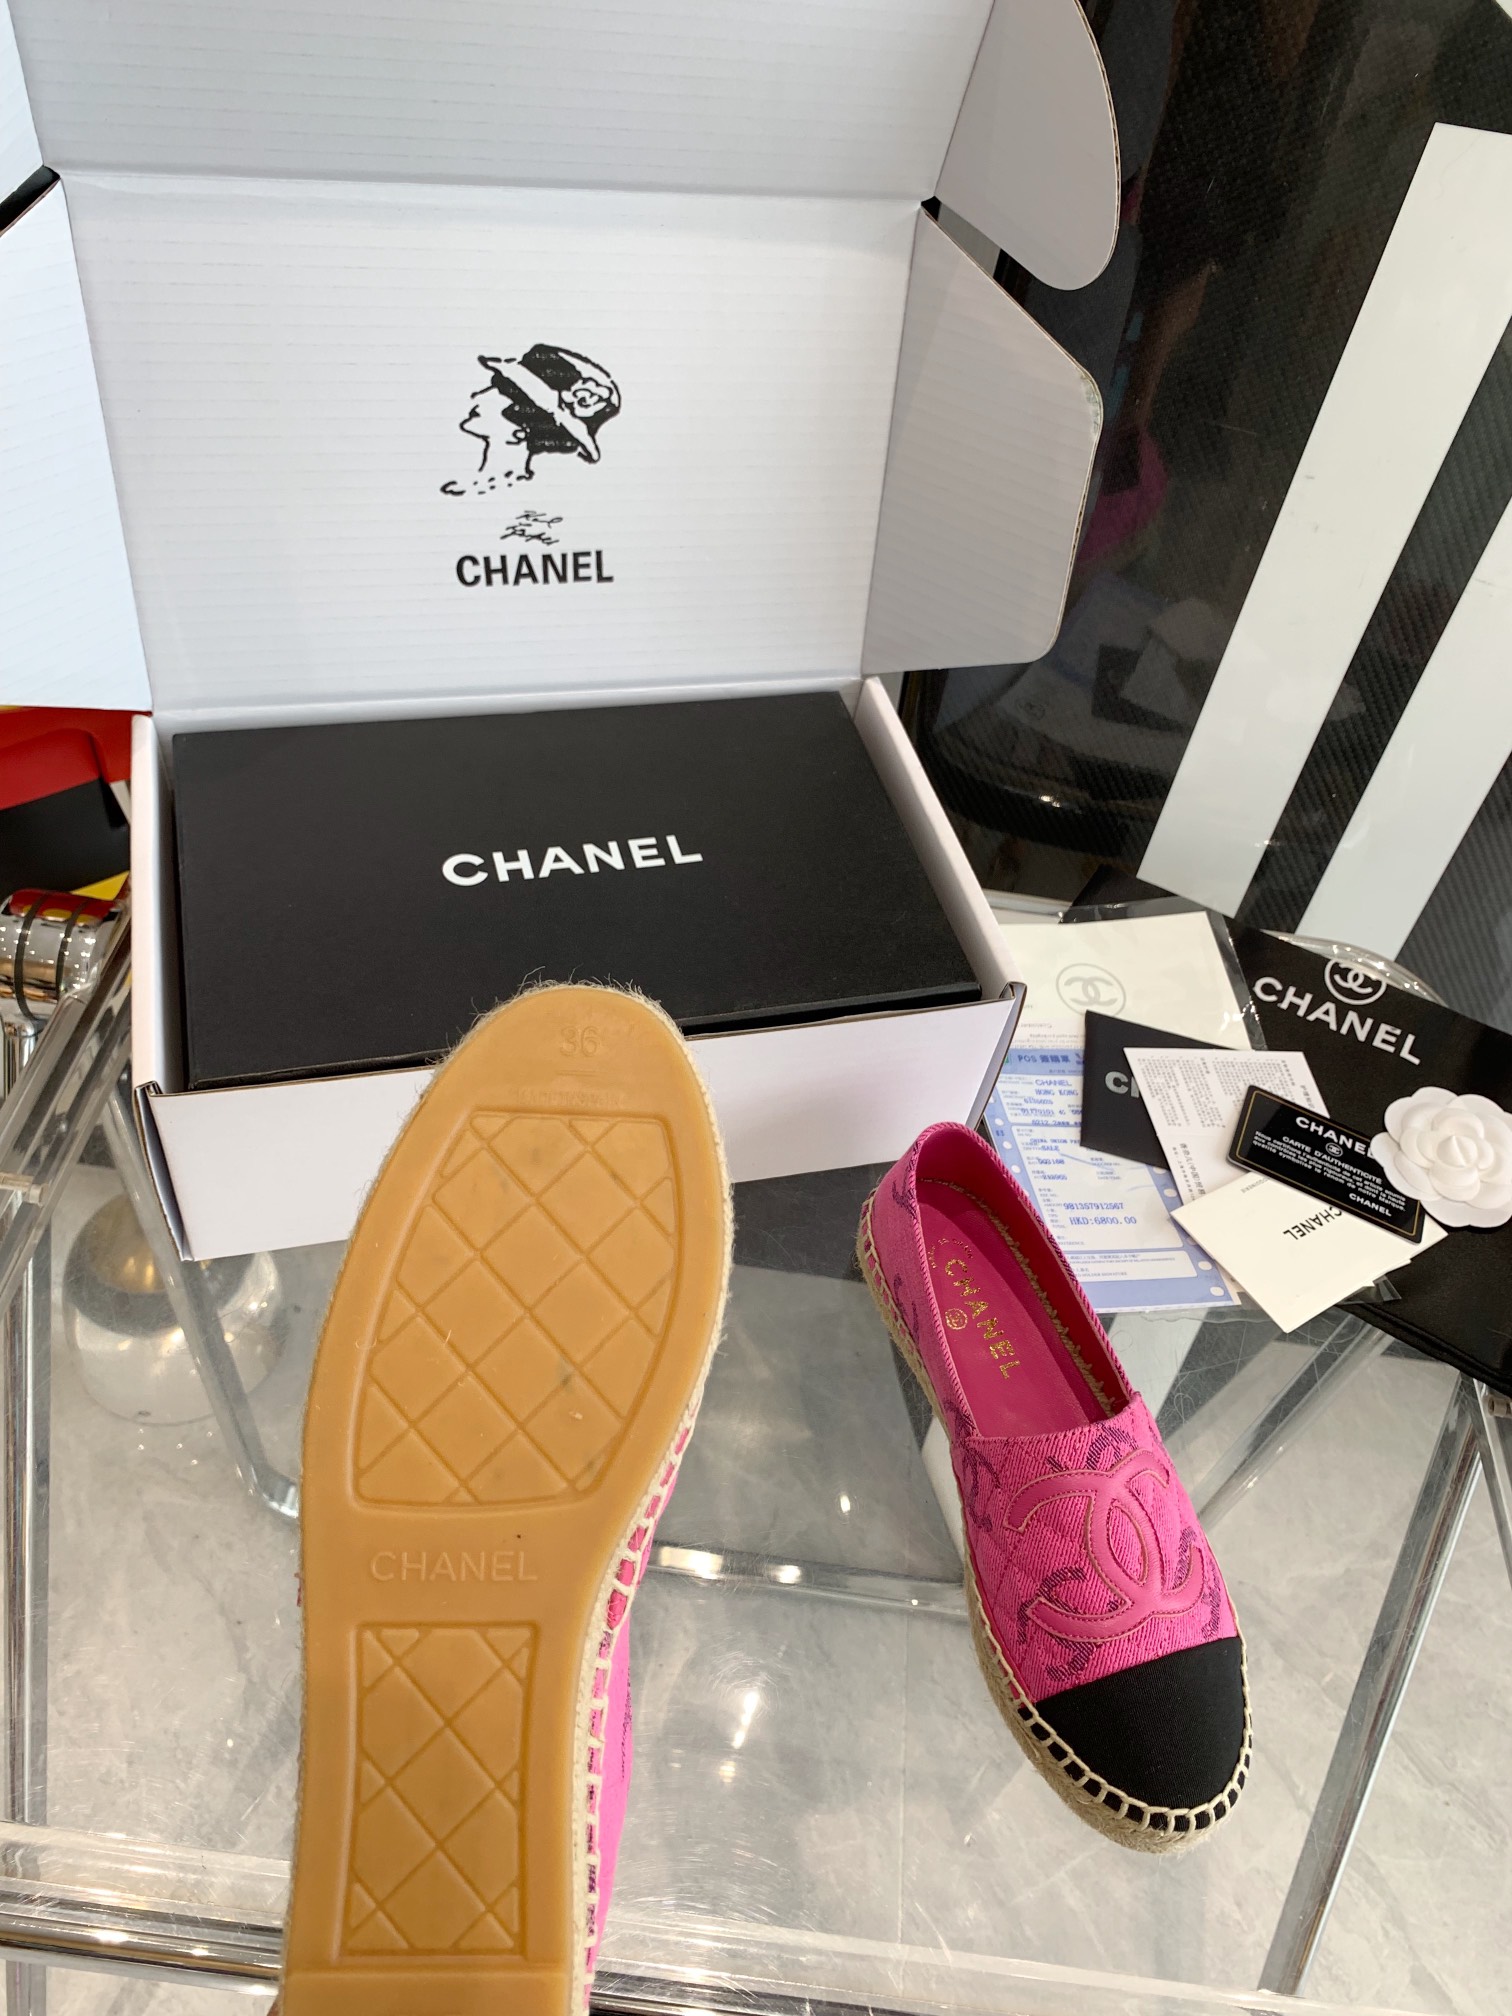 CHAENL シャネルの靴 値段偽物 レザー フィッシャーマンシューズ 歩きやすい ピンク_6